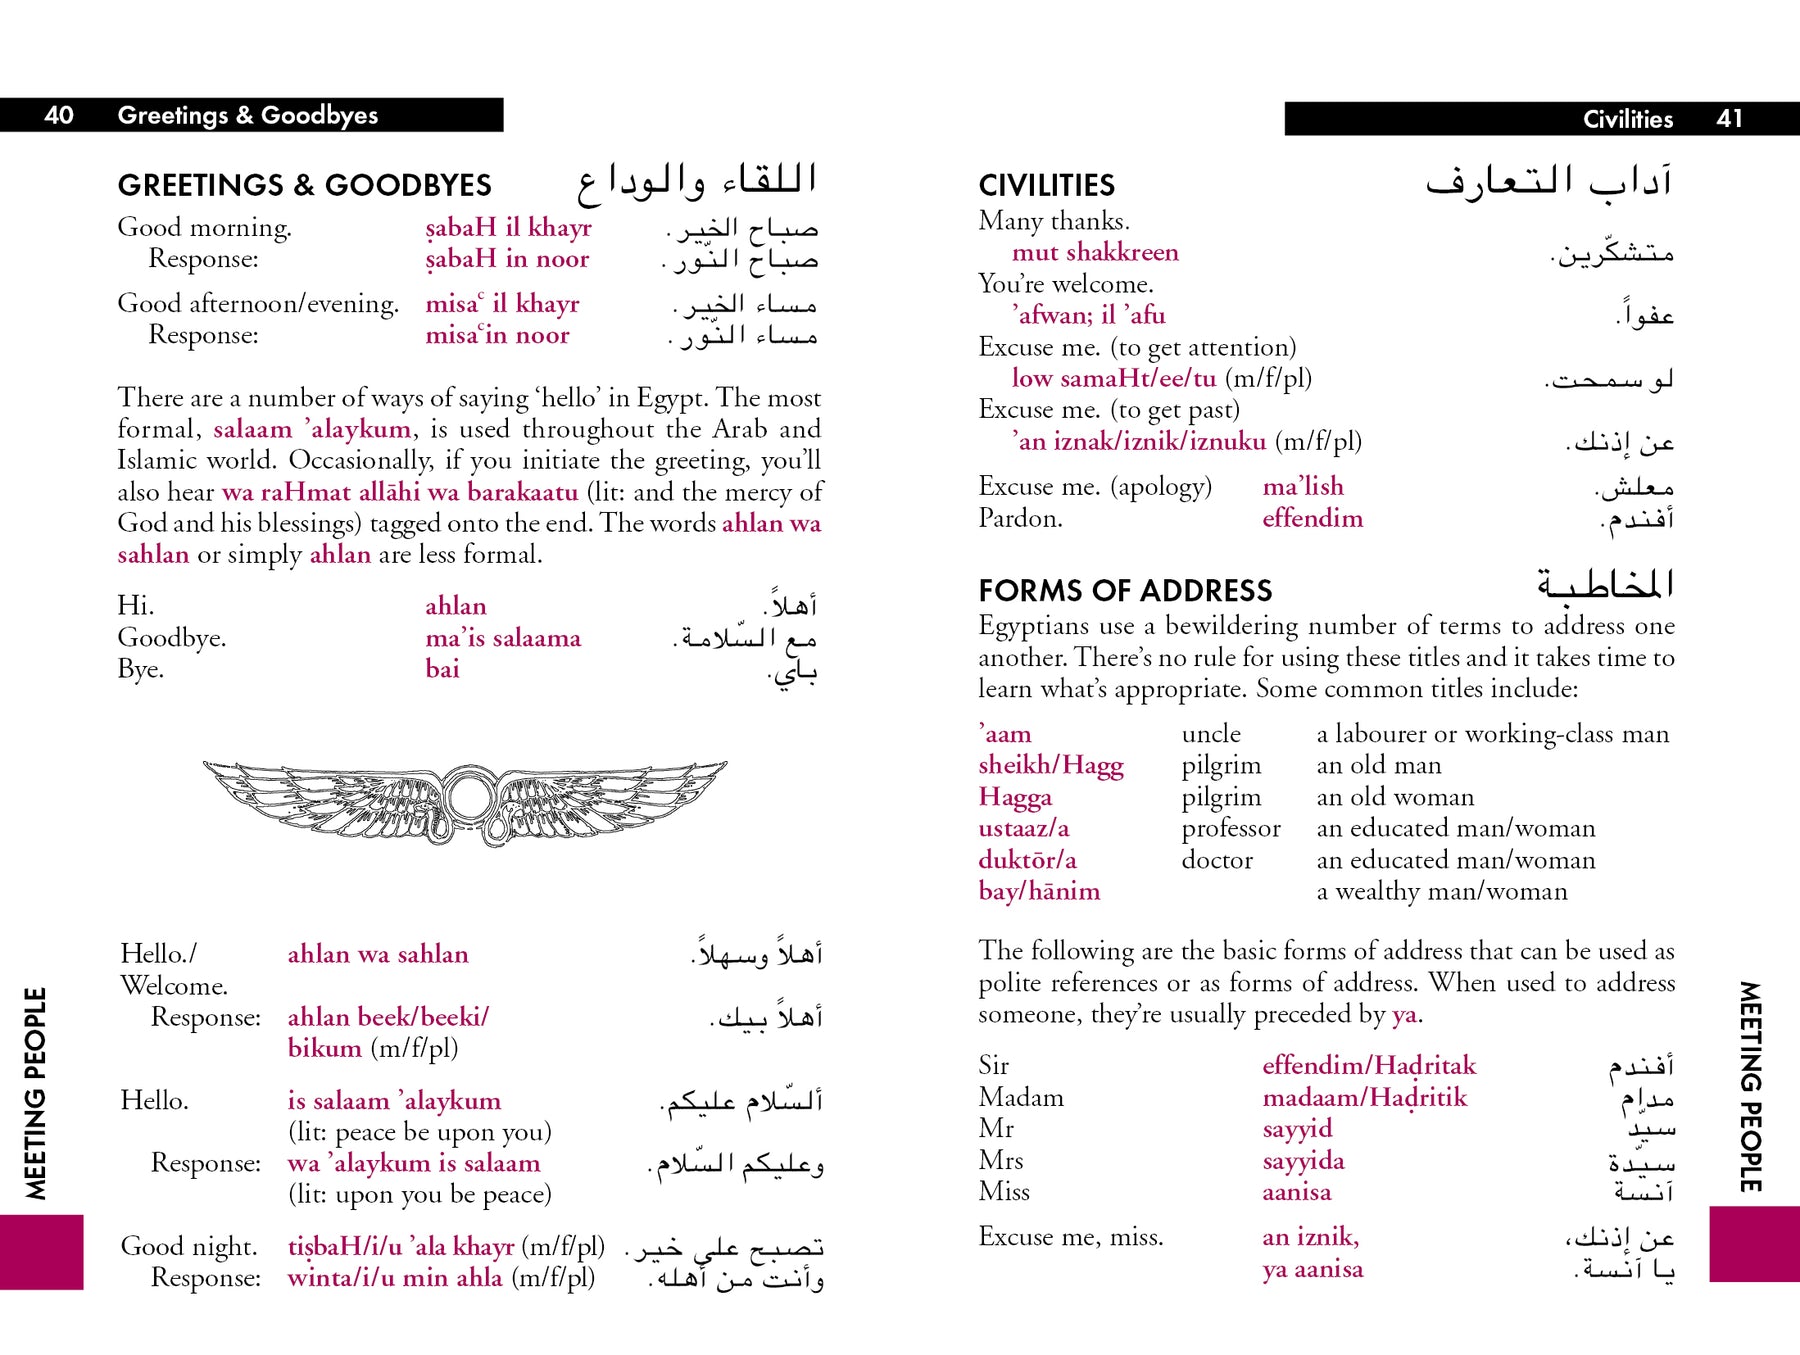 Egyptian Arabic Phrasebook & Dictionary